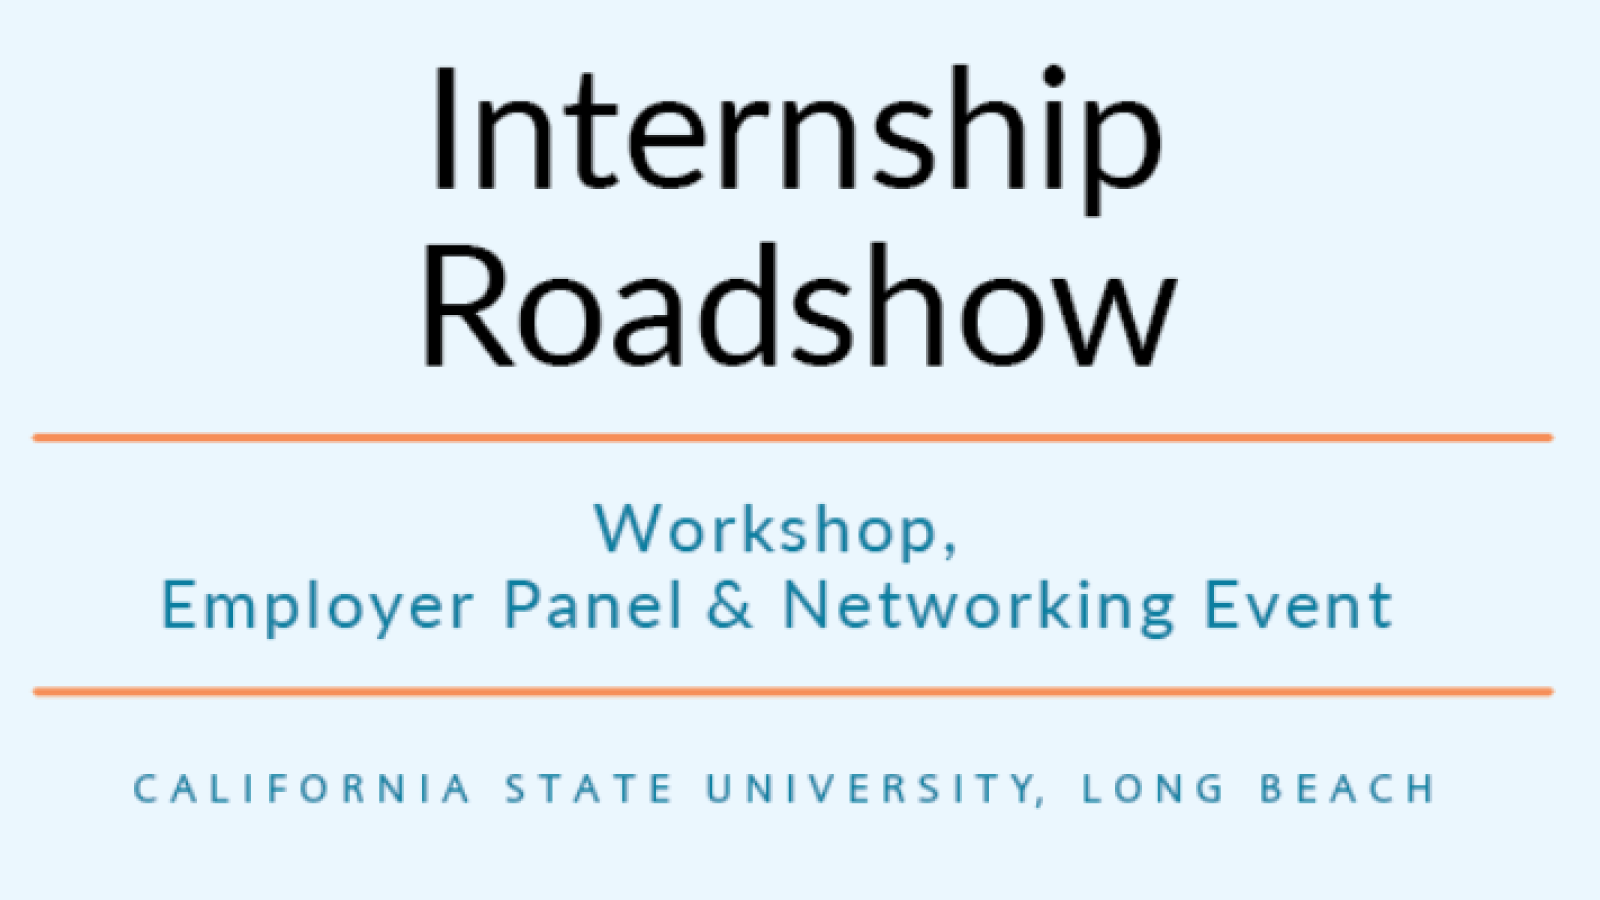 Internship Roadshow Workshop, Employer Panel & Networking Event California State University Long Beach